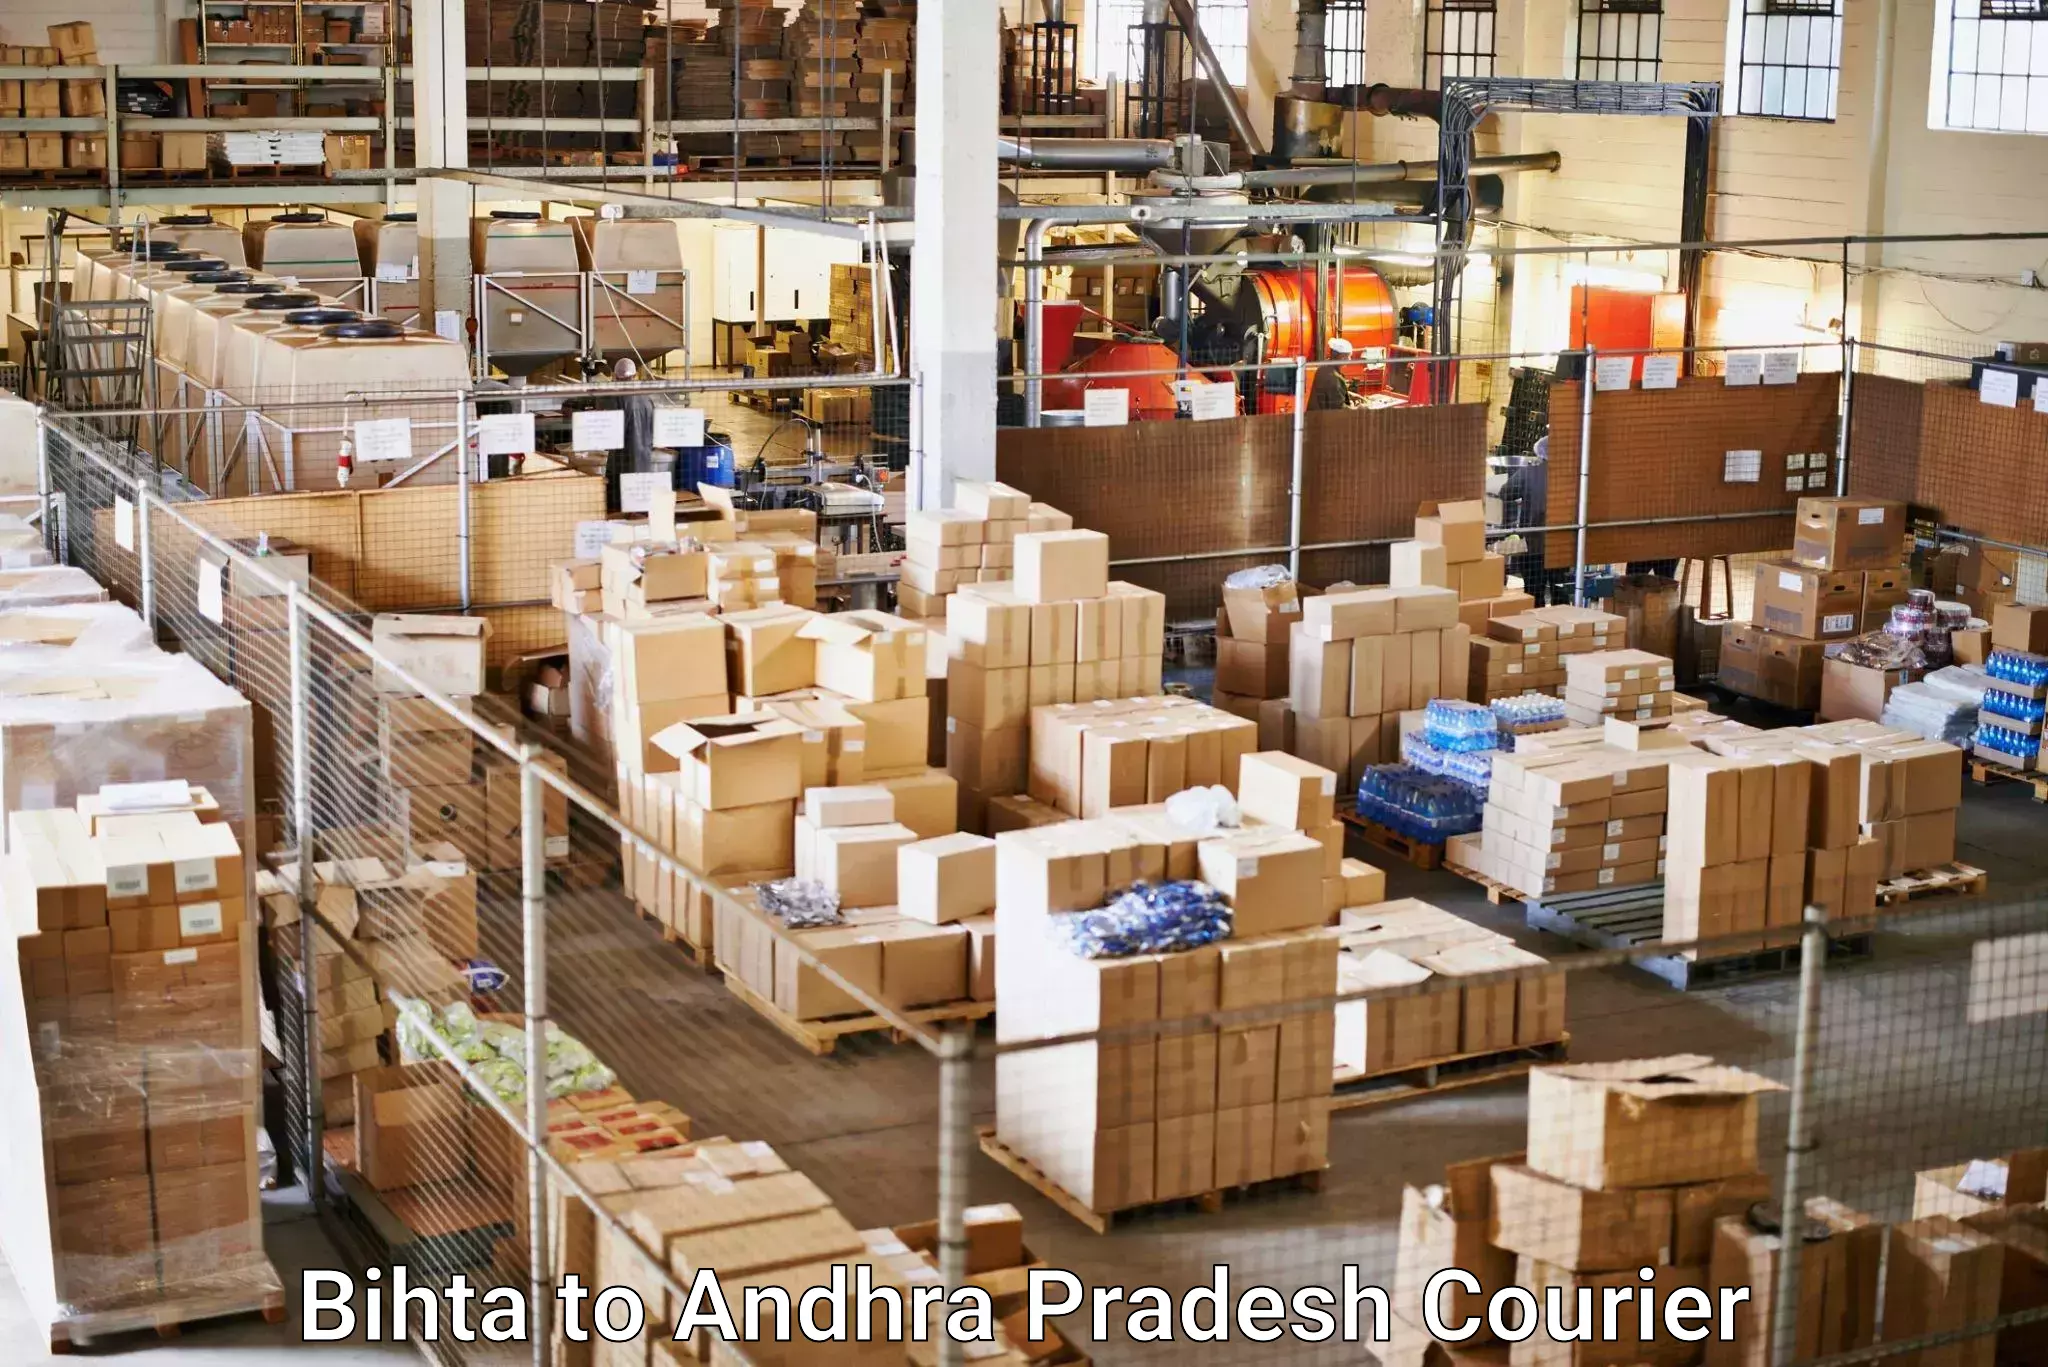 Courier service comparison Bihta to Gopalapatnam